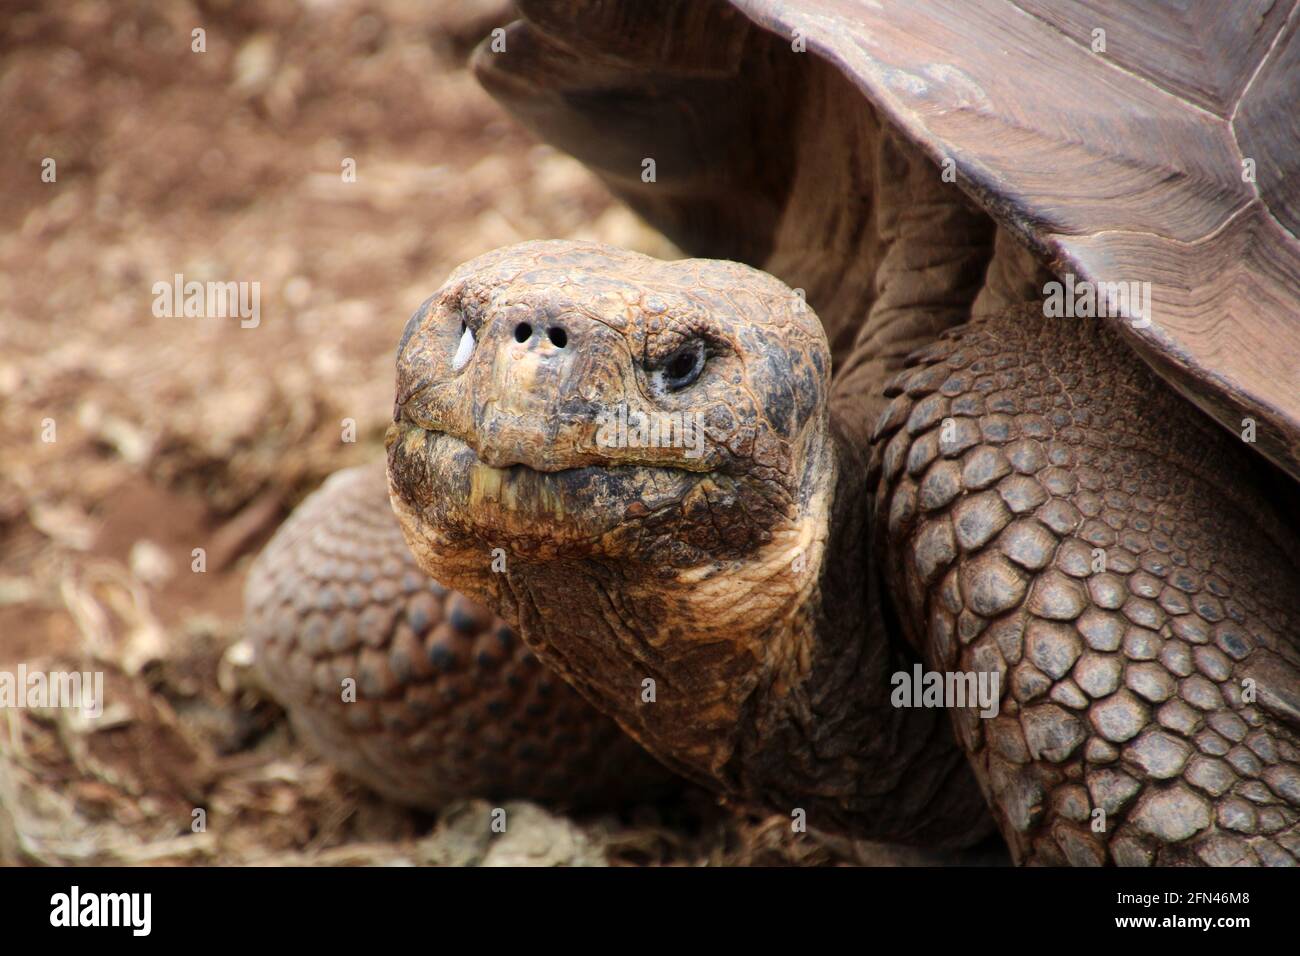 Giant tortoise at the Charles Darwin Foundation on the Galapagos Island of Santa Cruz, Ecuador, South America Stock Photo